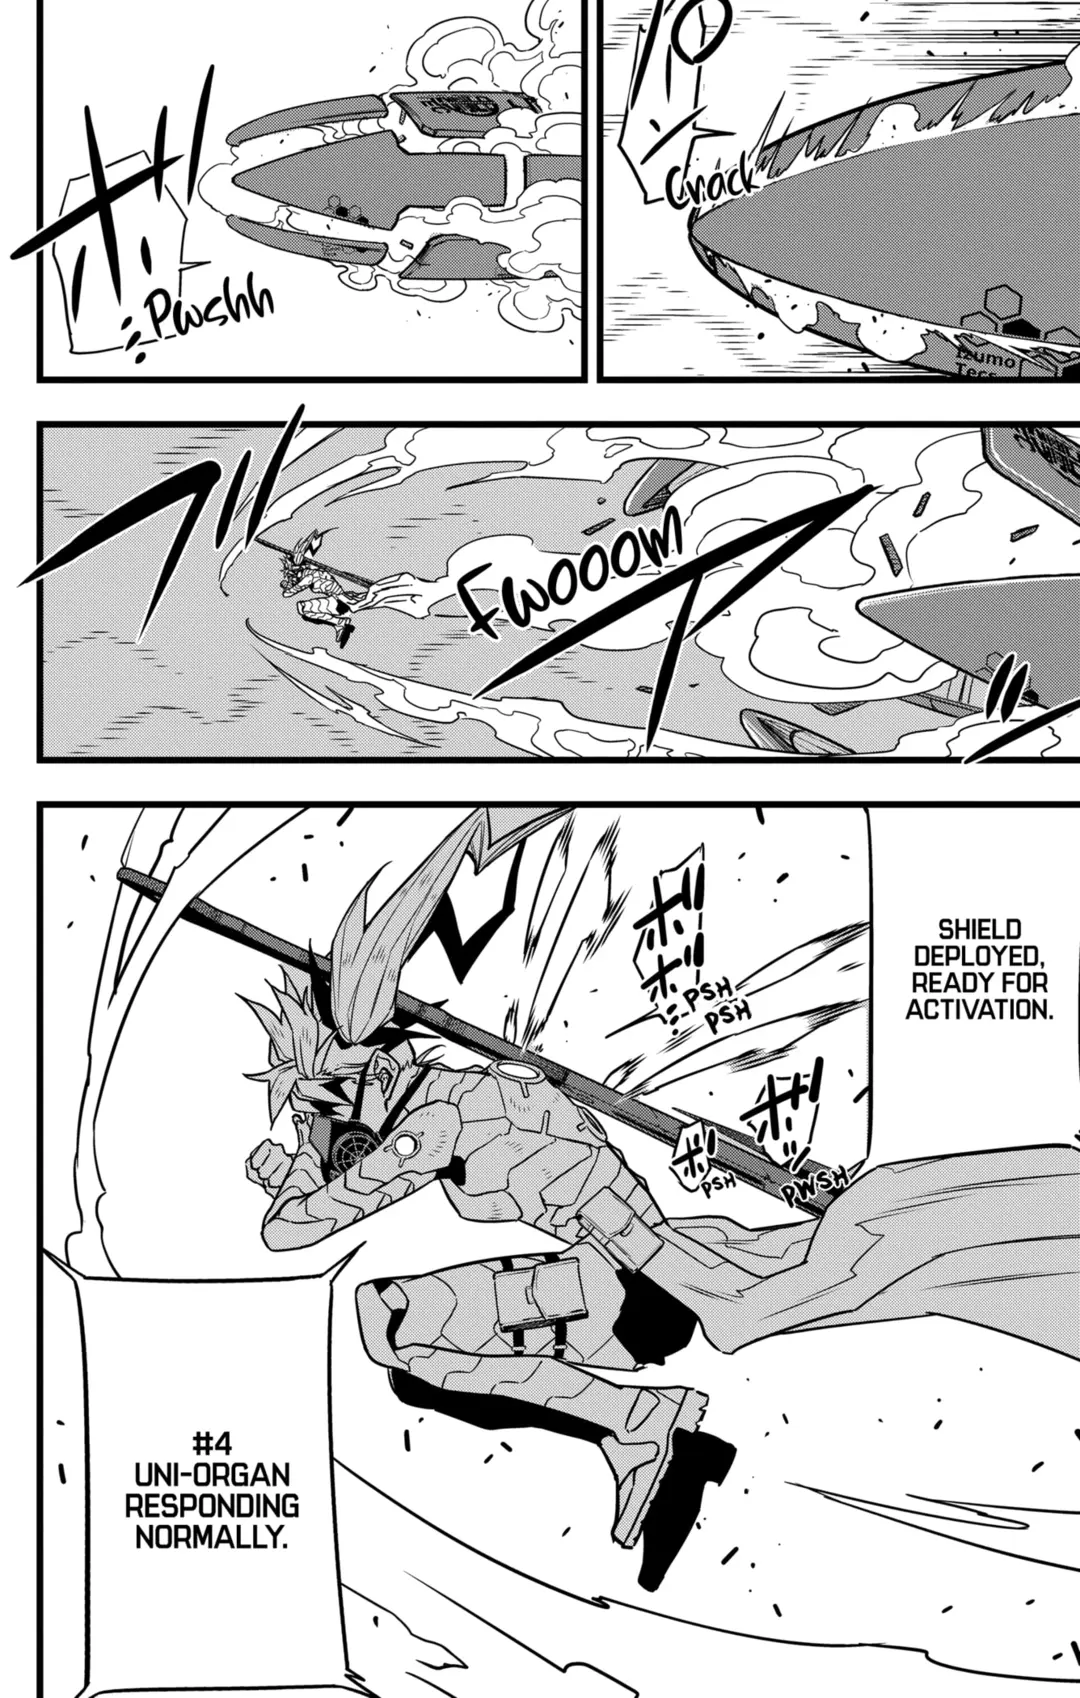 Kaiju No. 8 Chapter 72 page 4 - Mangakakalot